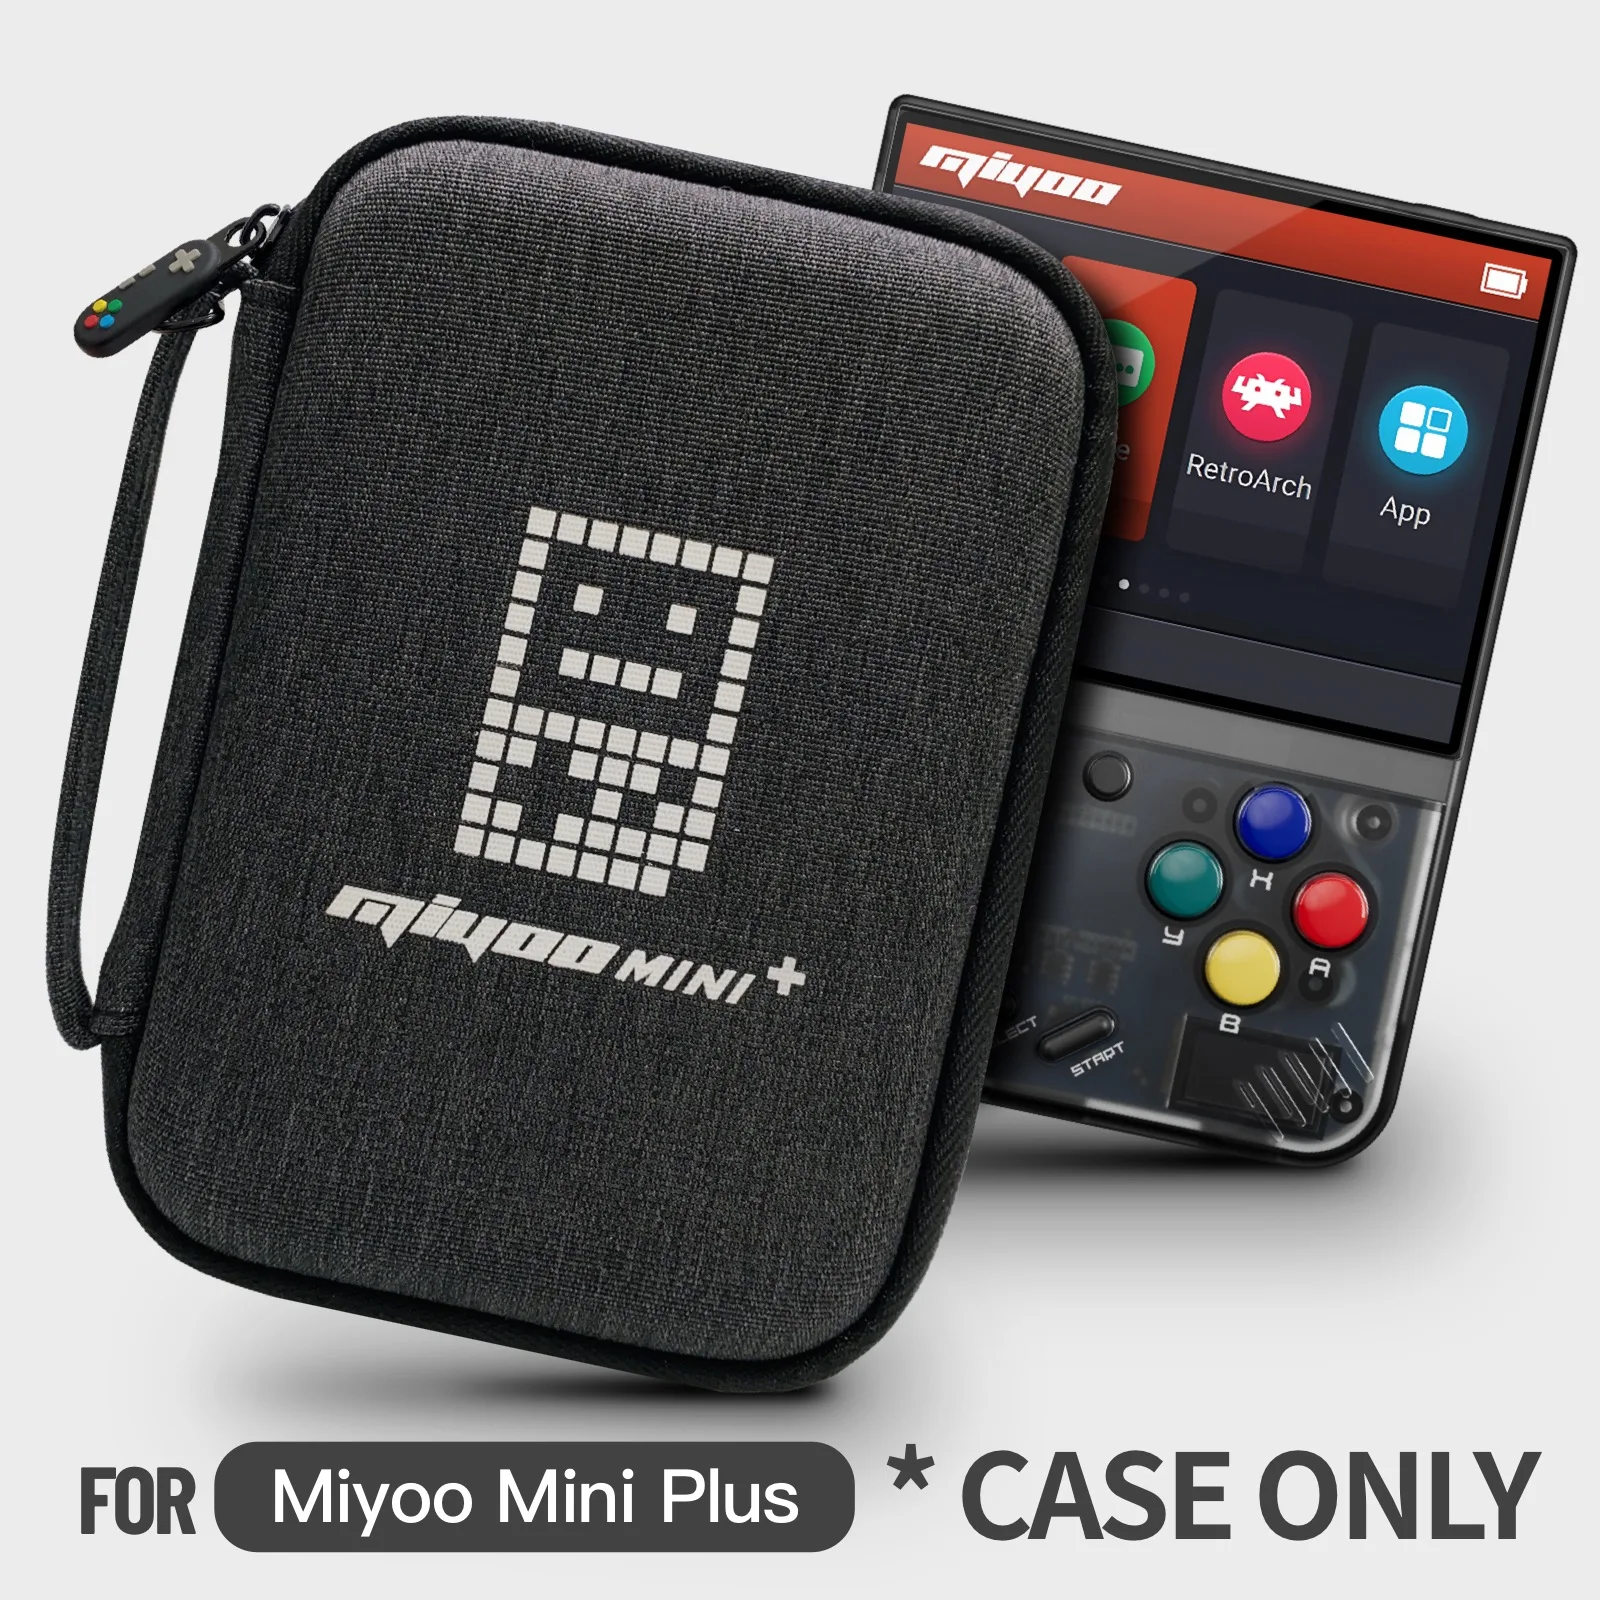 Miyoo mini plus pouzdro, těžko přenosné dedikované pouzdro pro miyoo mini plus V3 s 3.5 palec obrazovka